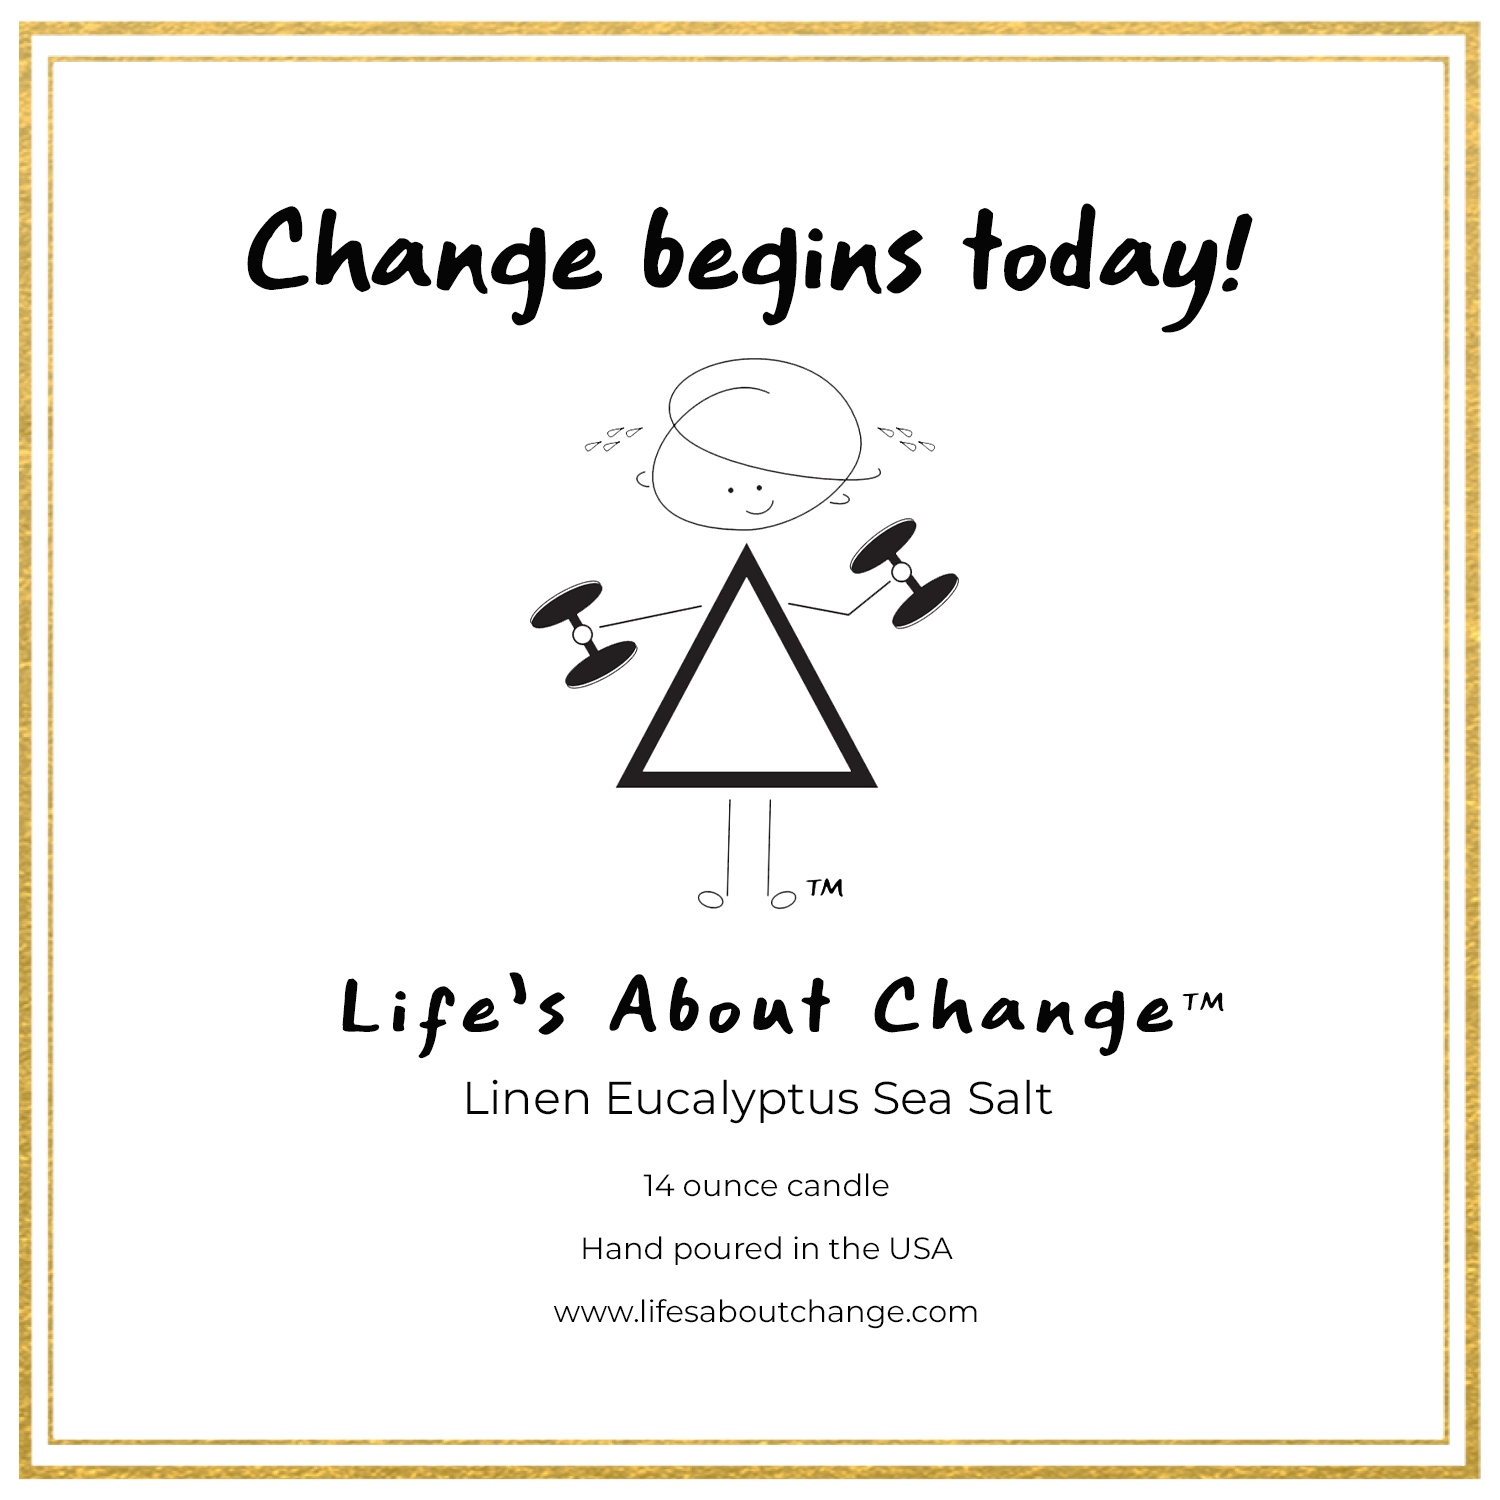 Change begins today